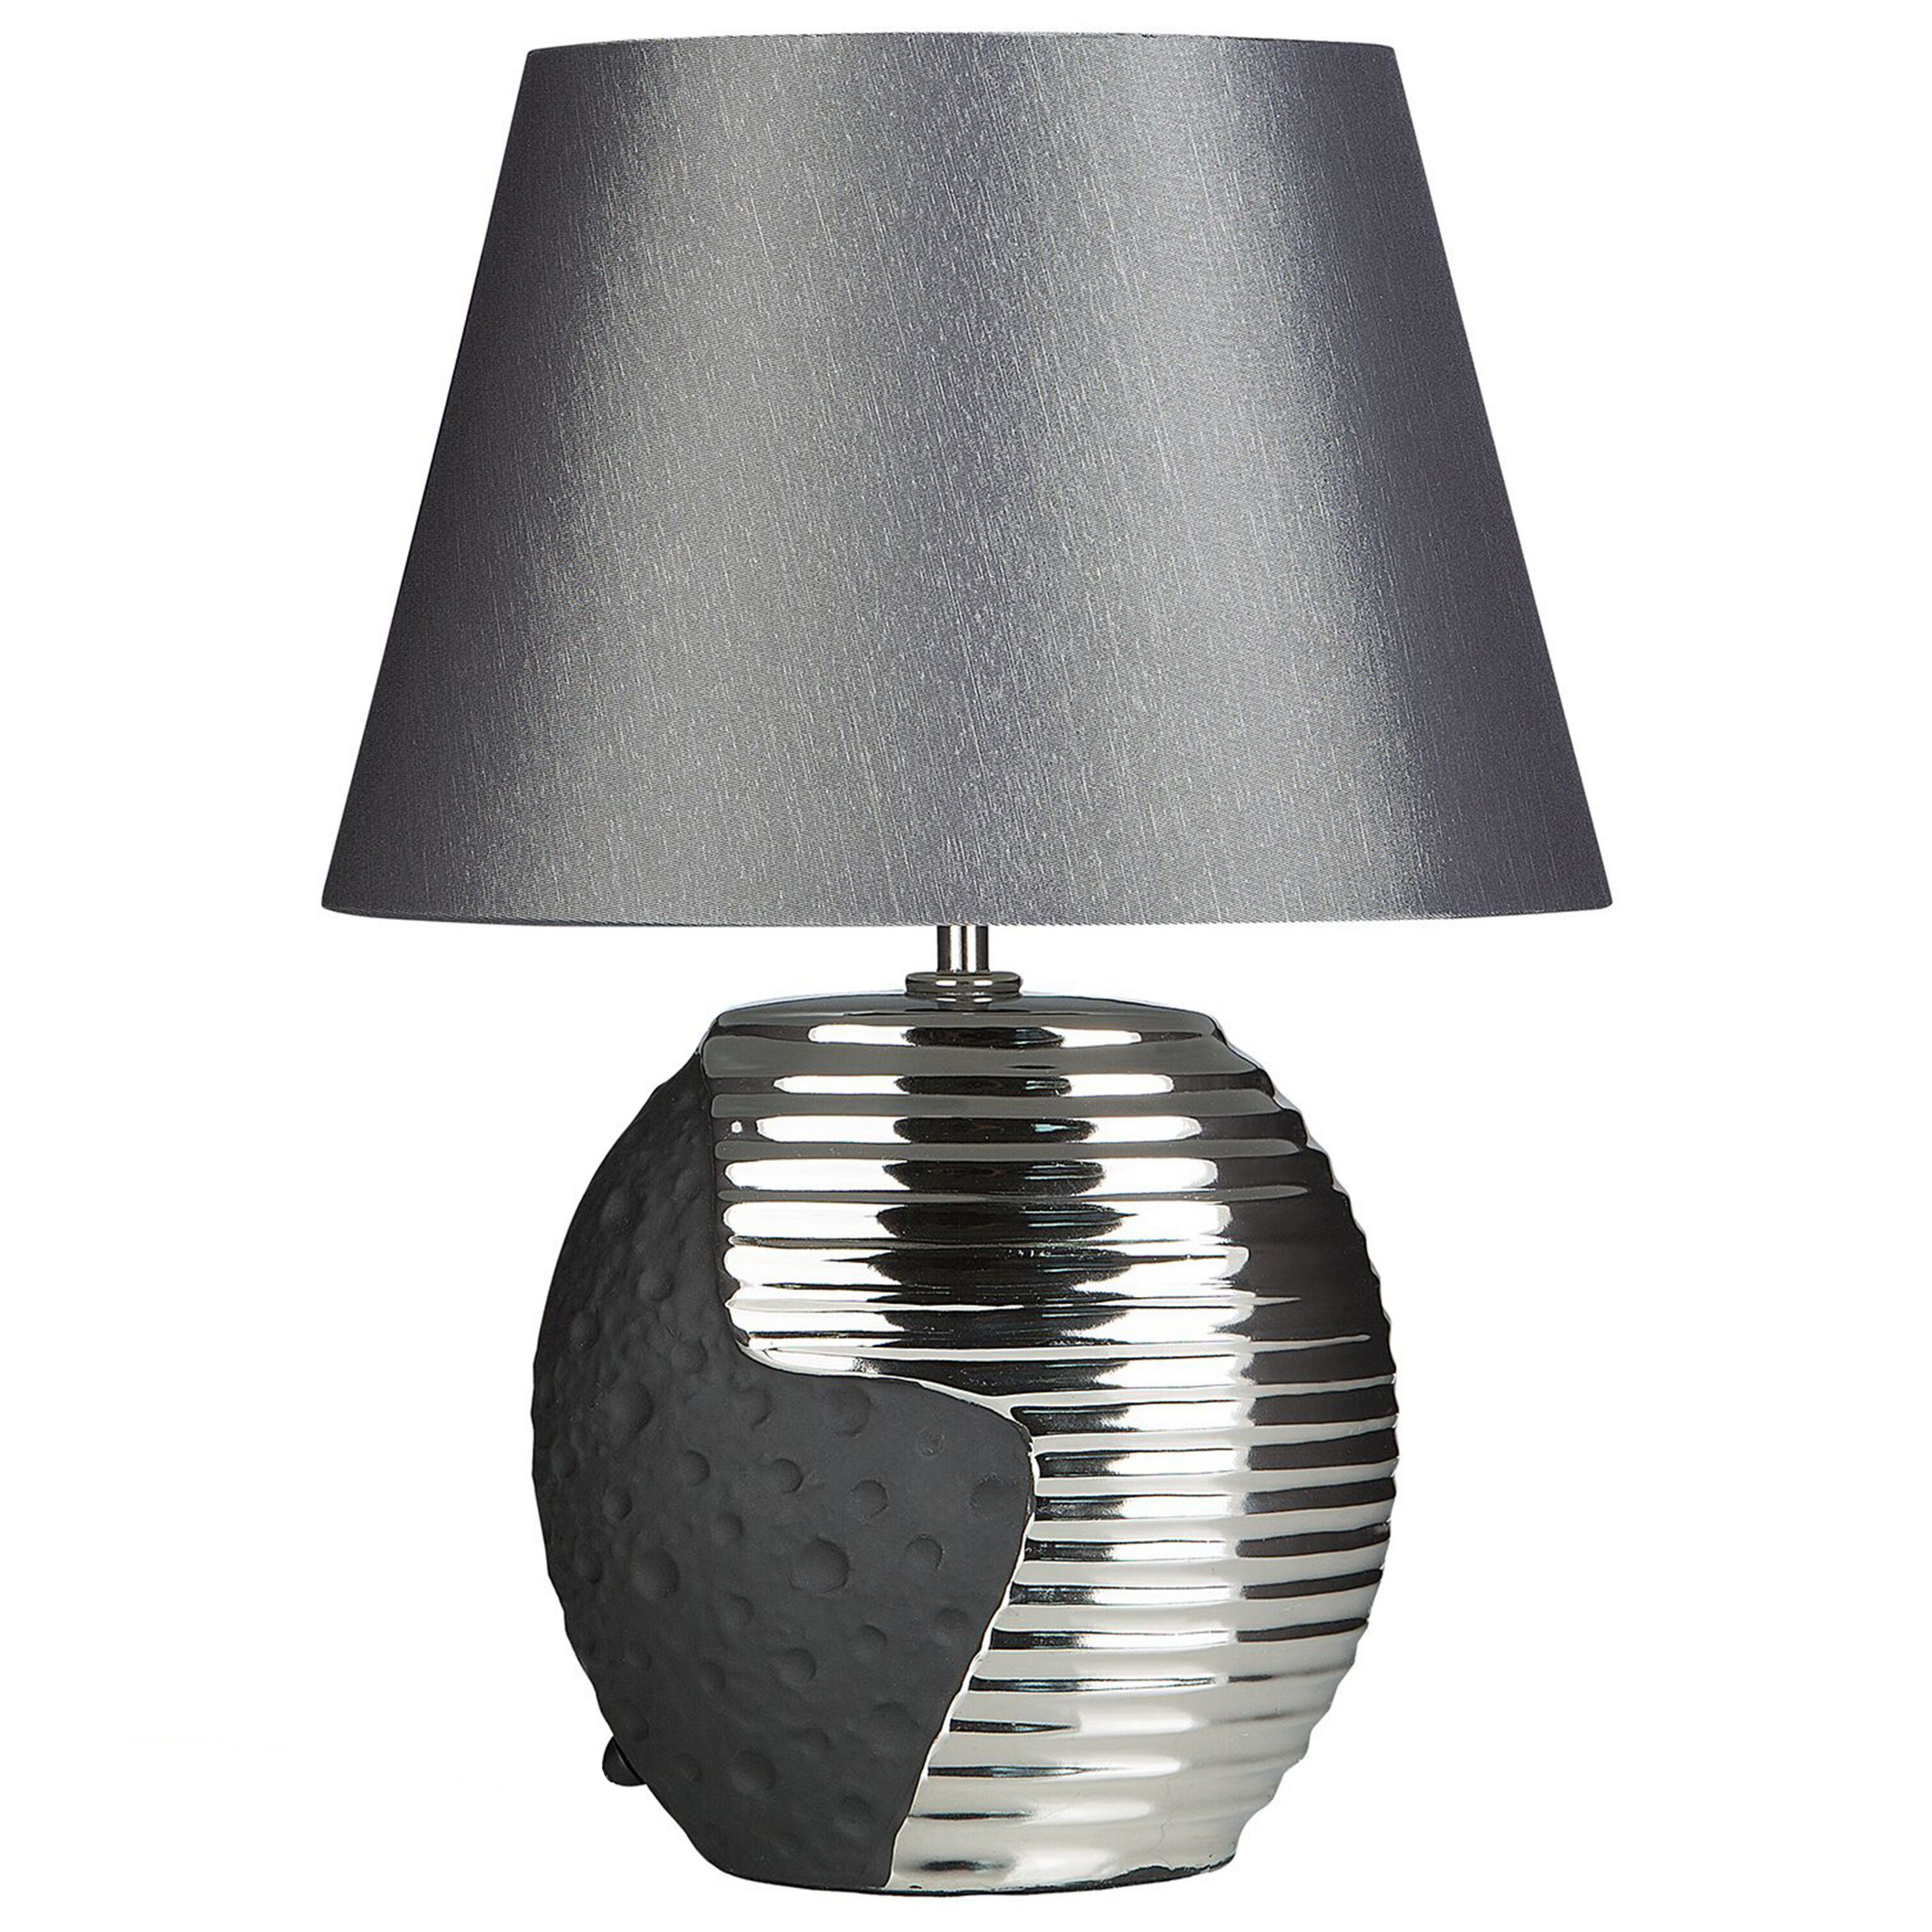 Beliani Table Lamp Silver Ceramic Base Fabric Drum Shade Bedside Table Lamp